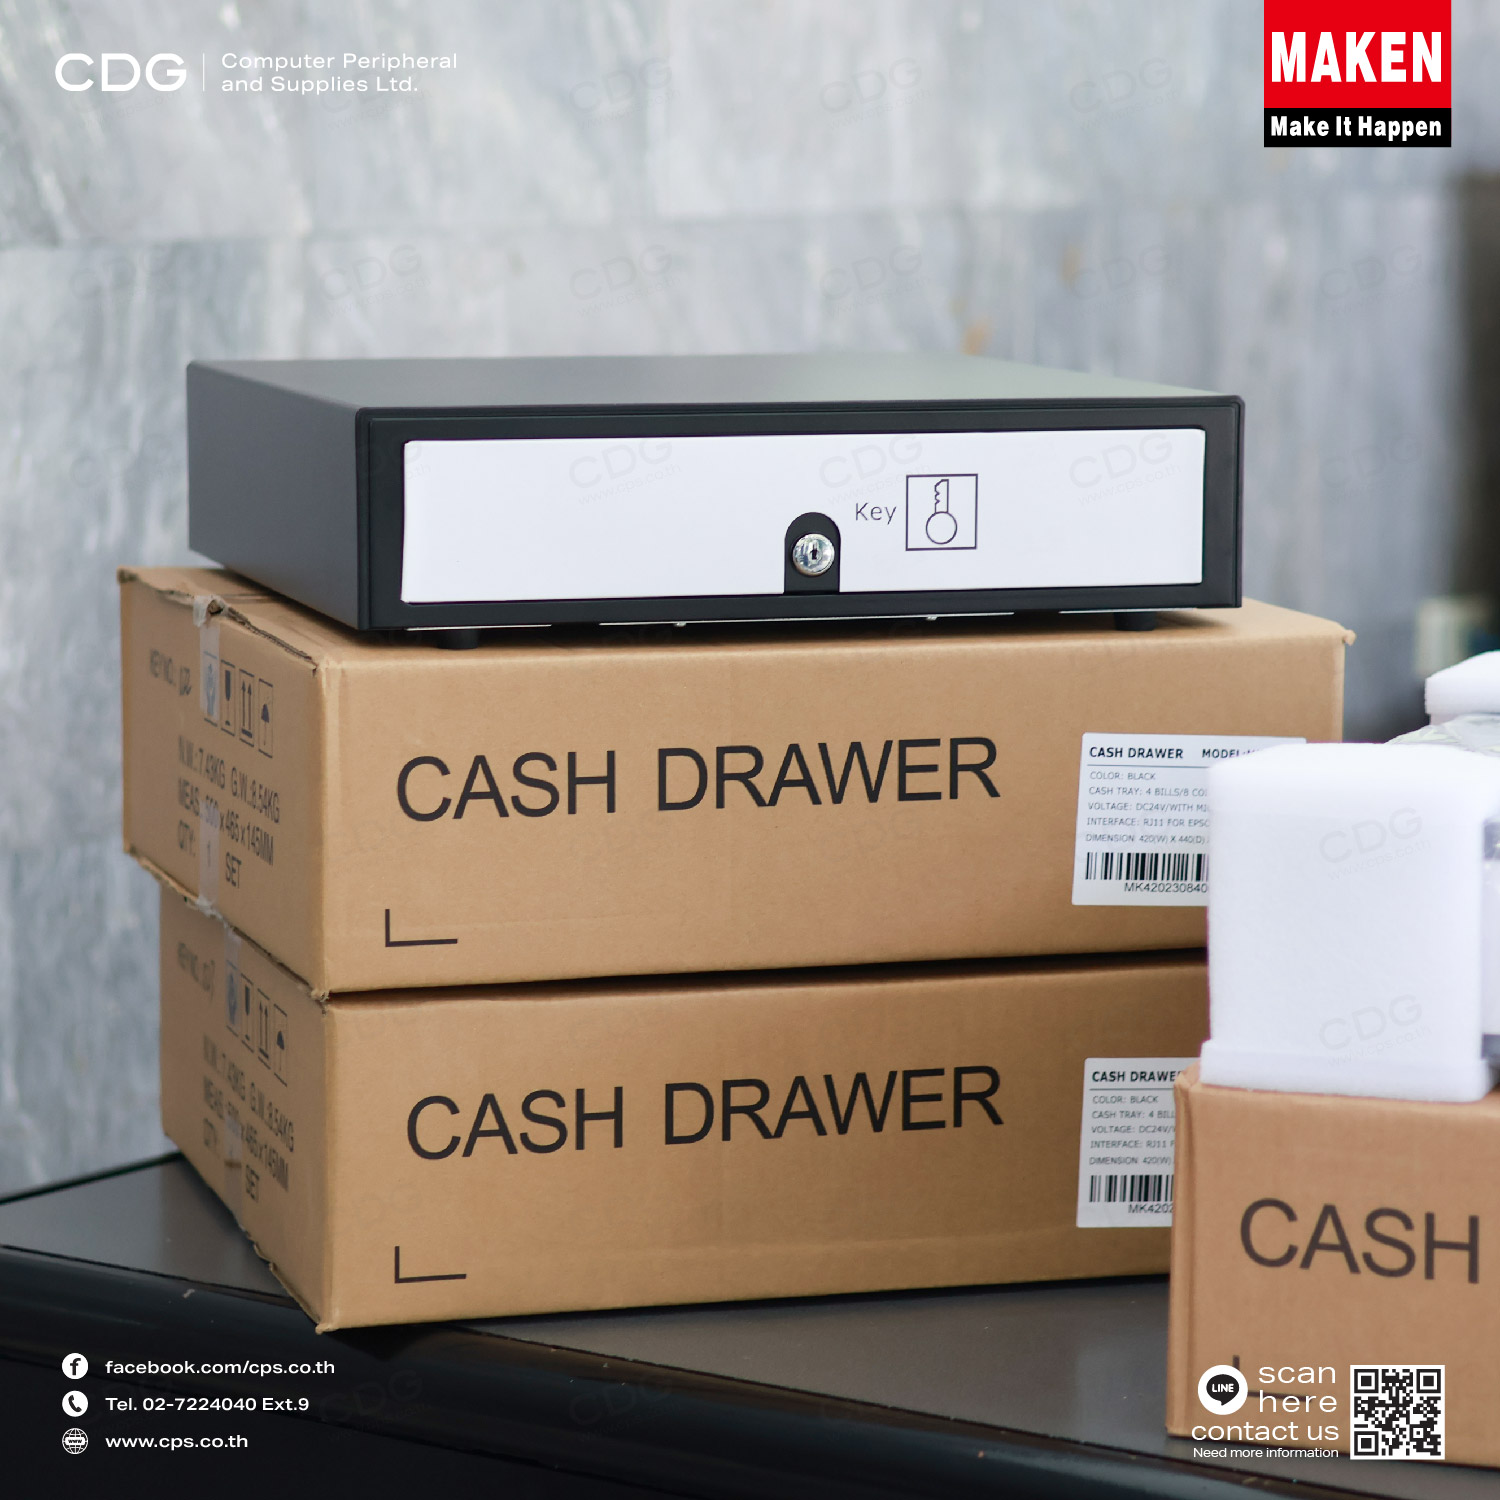 Cash Drawer MAKEN MK-420